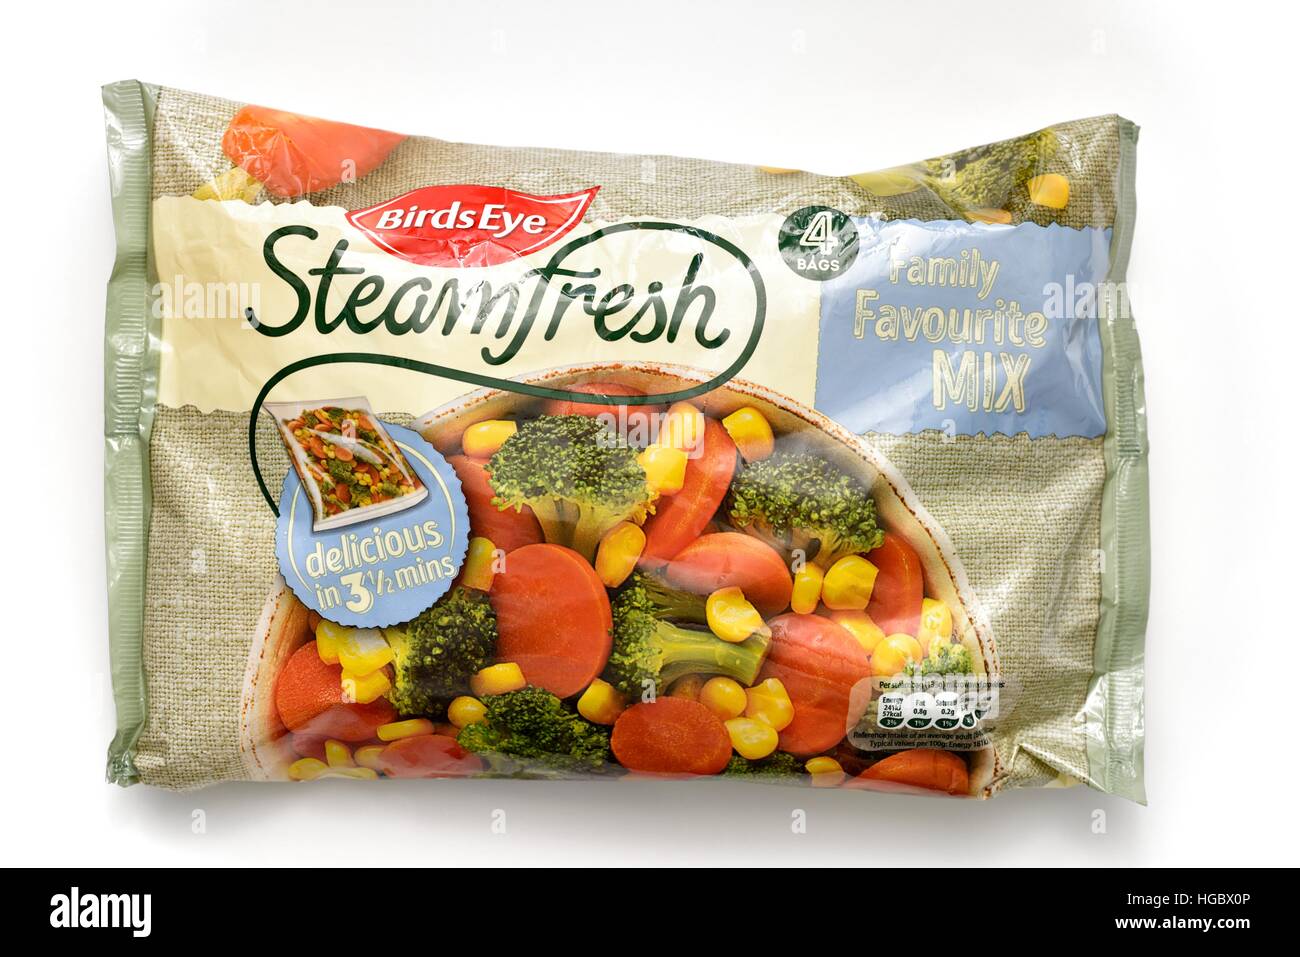 Birdseye steam fresh frozen vegetables Stock Photo